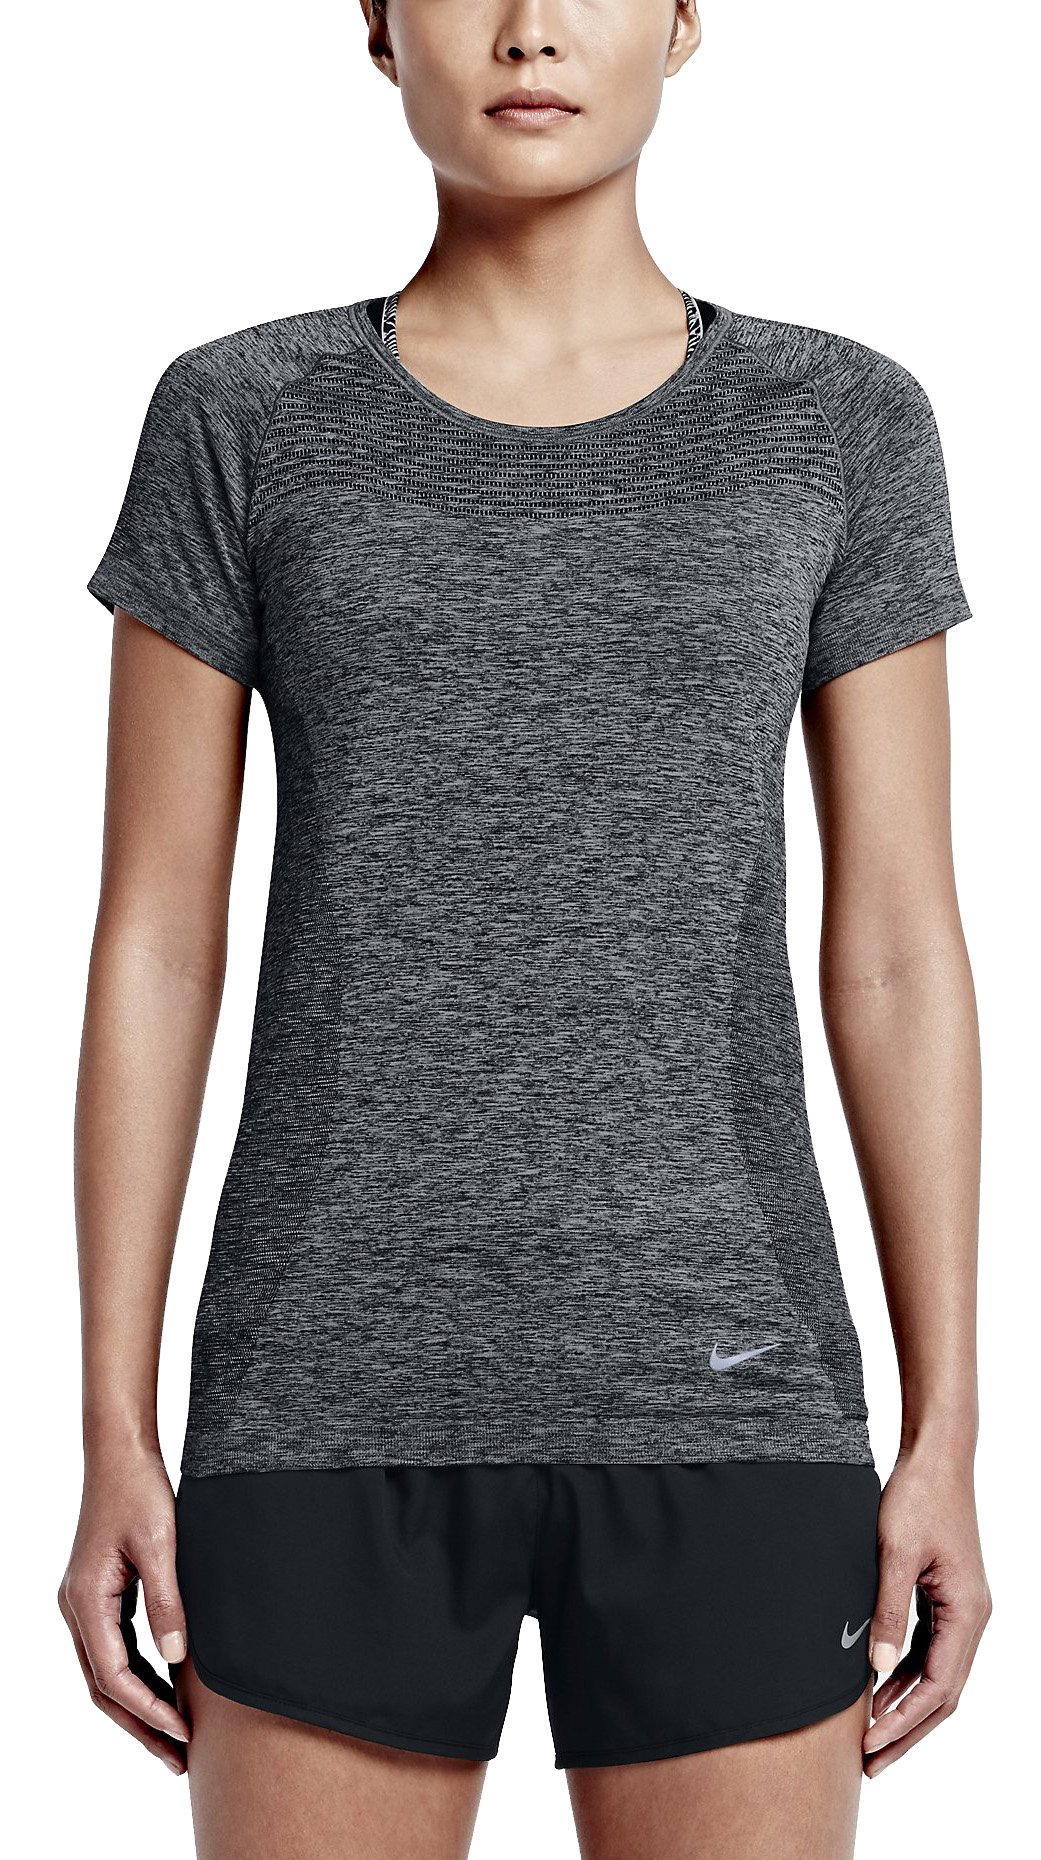 T-shirt Nike DRI-FIT KNIT SHORT SLEEVE 